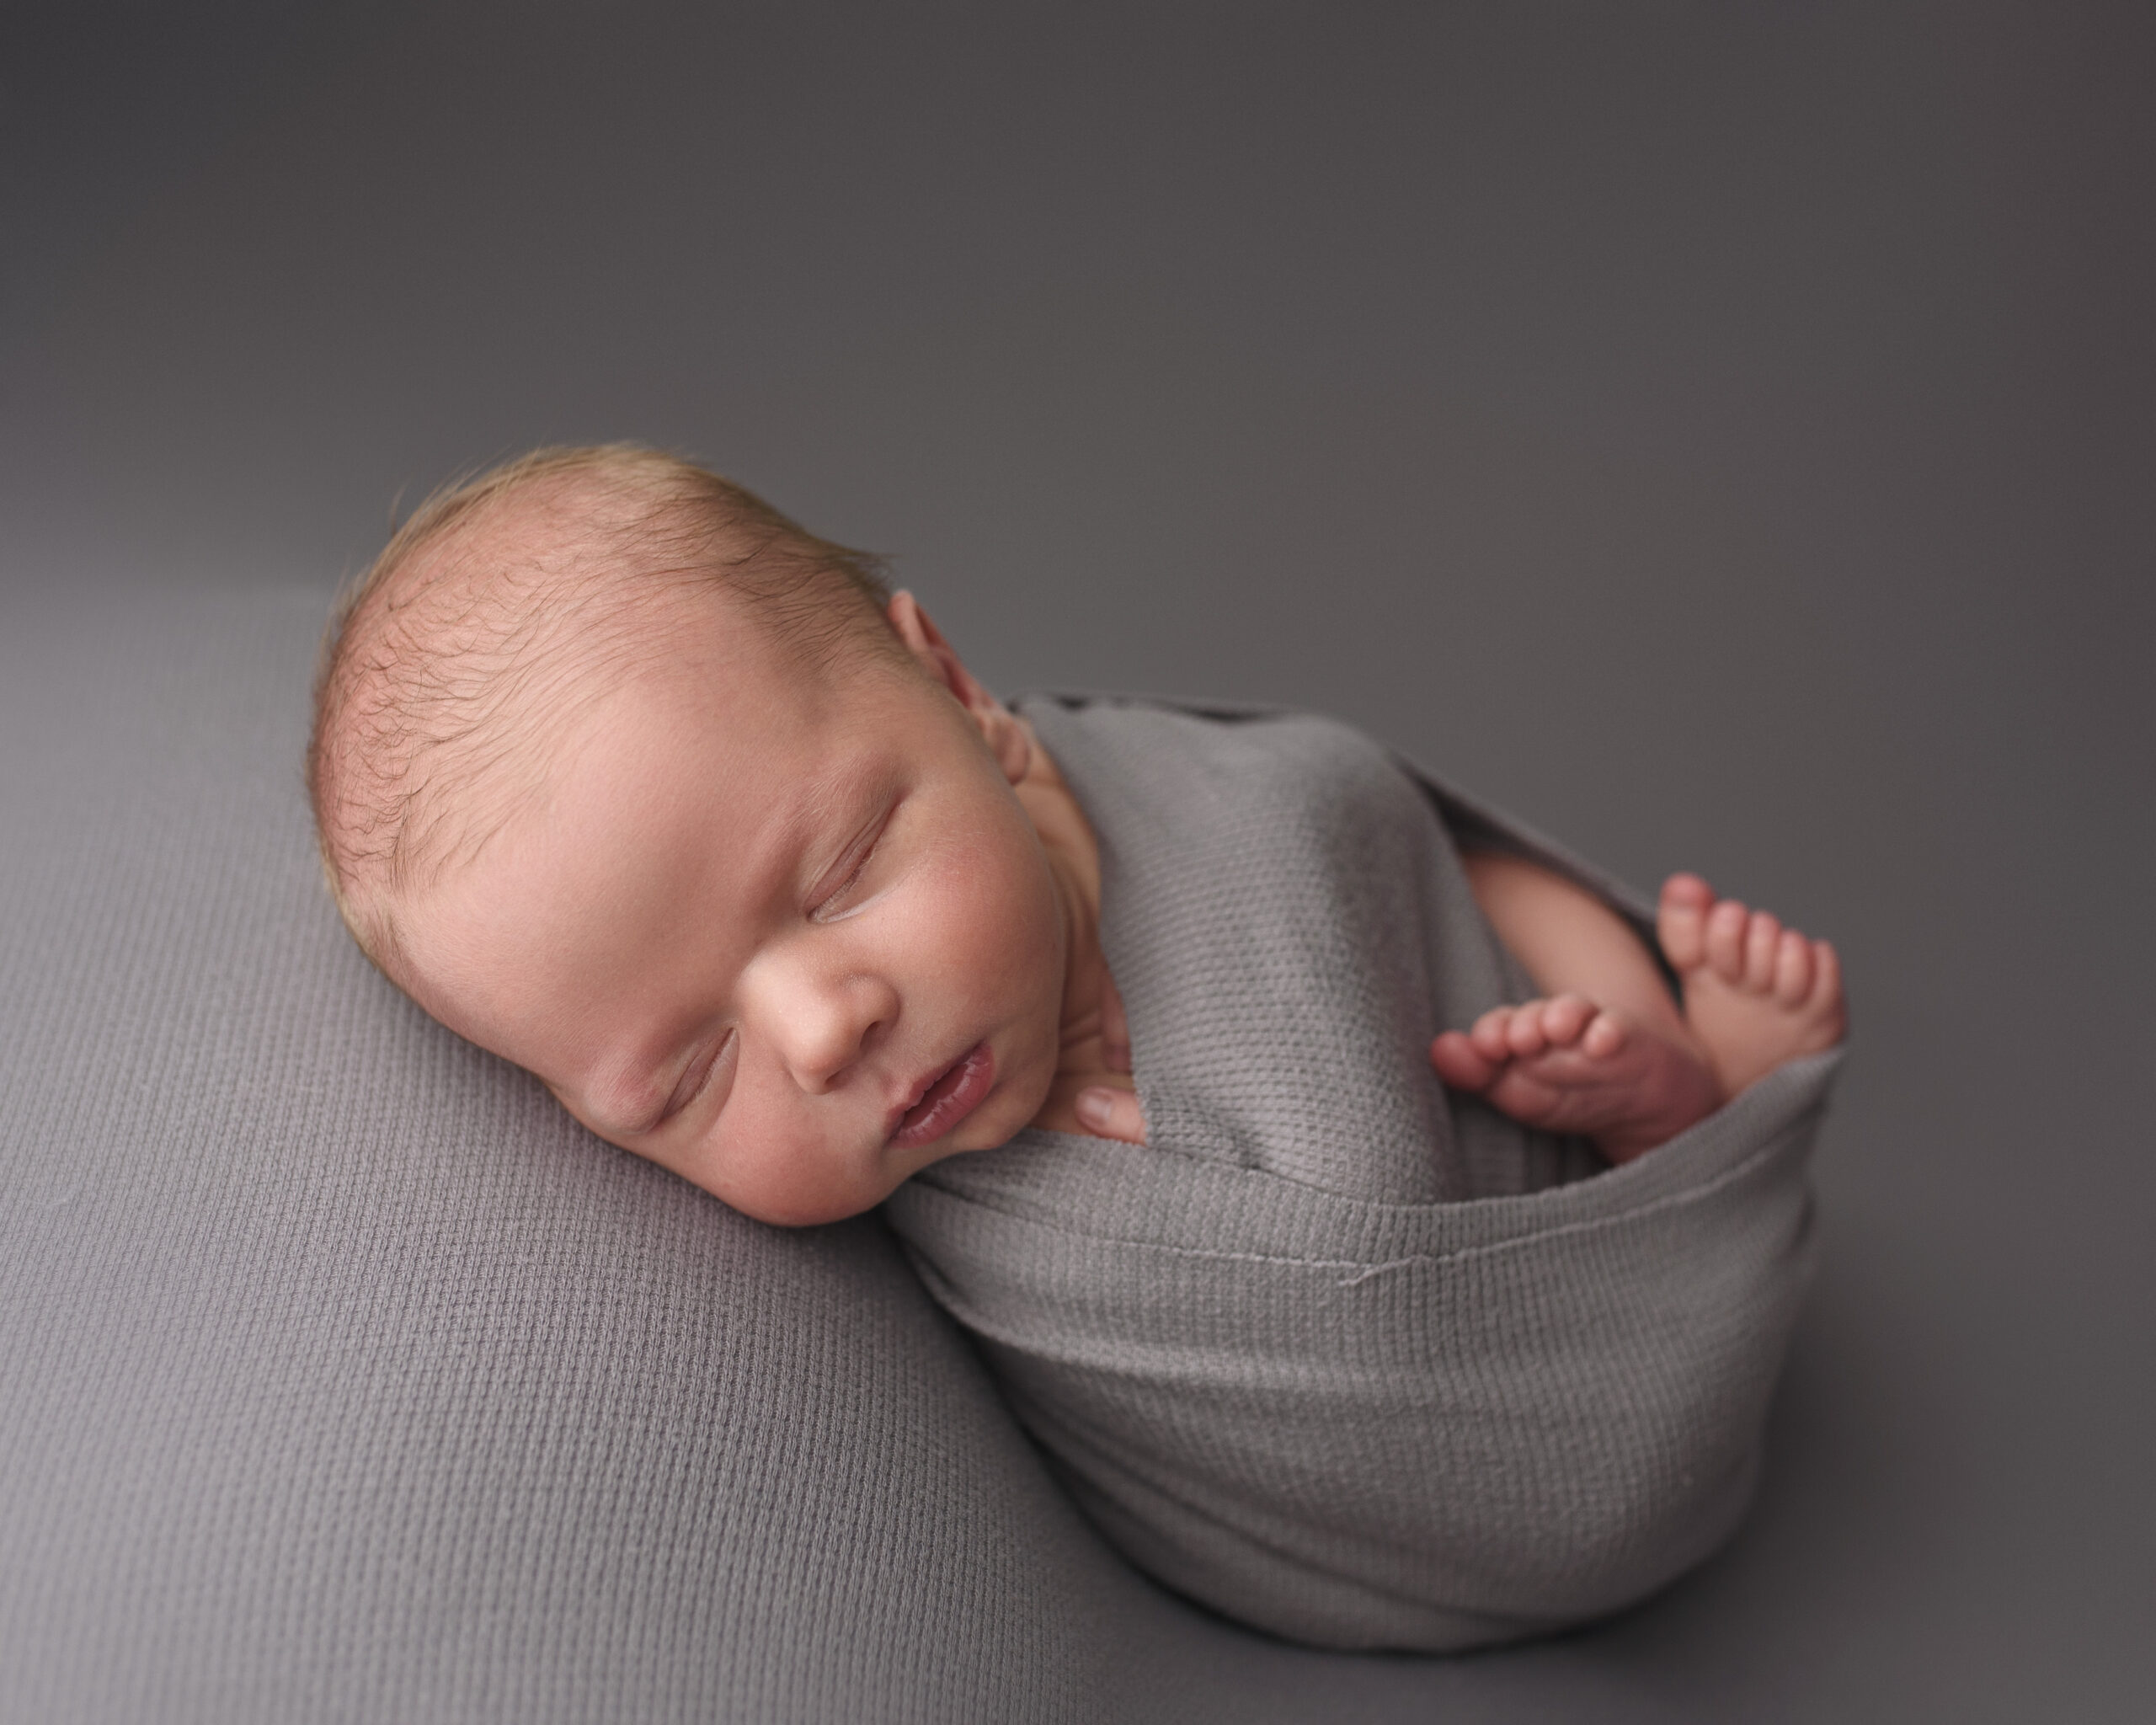 grand rapids michigan newborn photographer session baby boy on grey